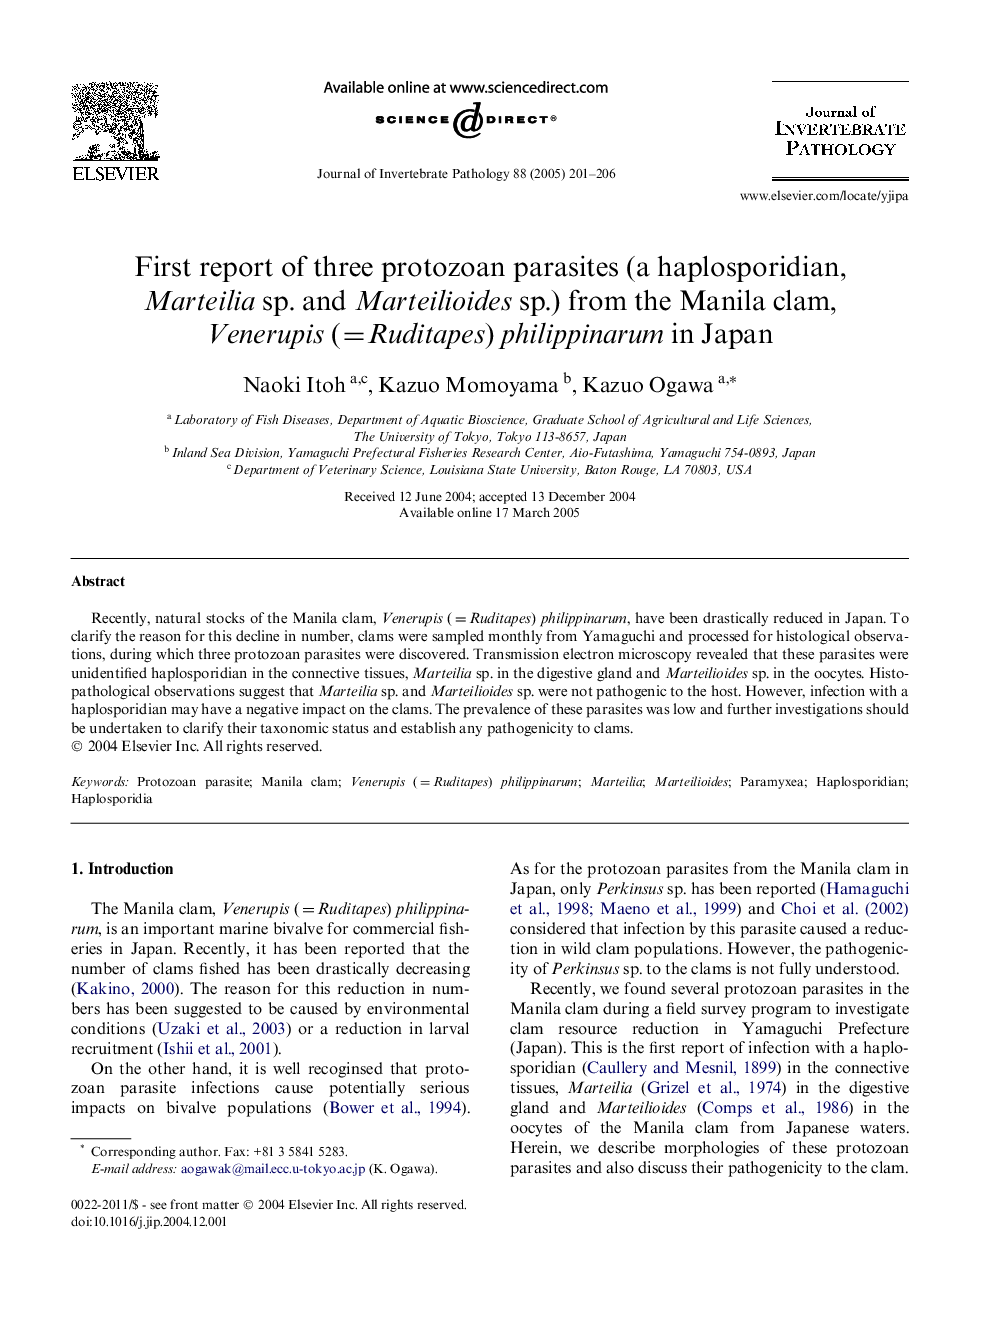 First report of three protozoan parasites (a haplosporidian, Marteilia sp. and Marteilioides sp.) from the Manila clam, Venerupis (=Ruditapes) philippinarum in Japan